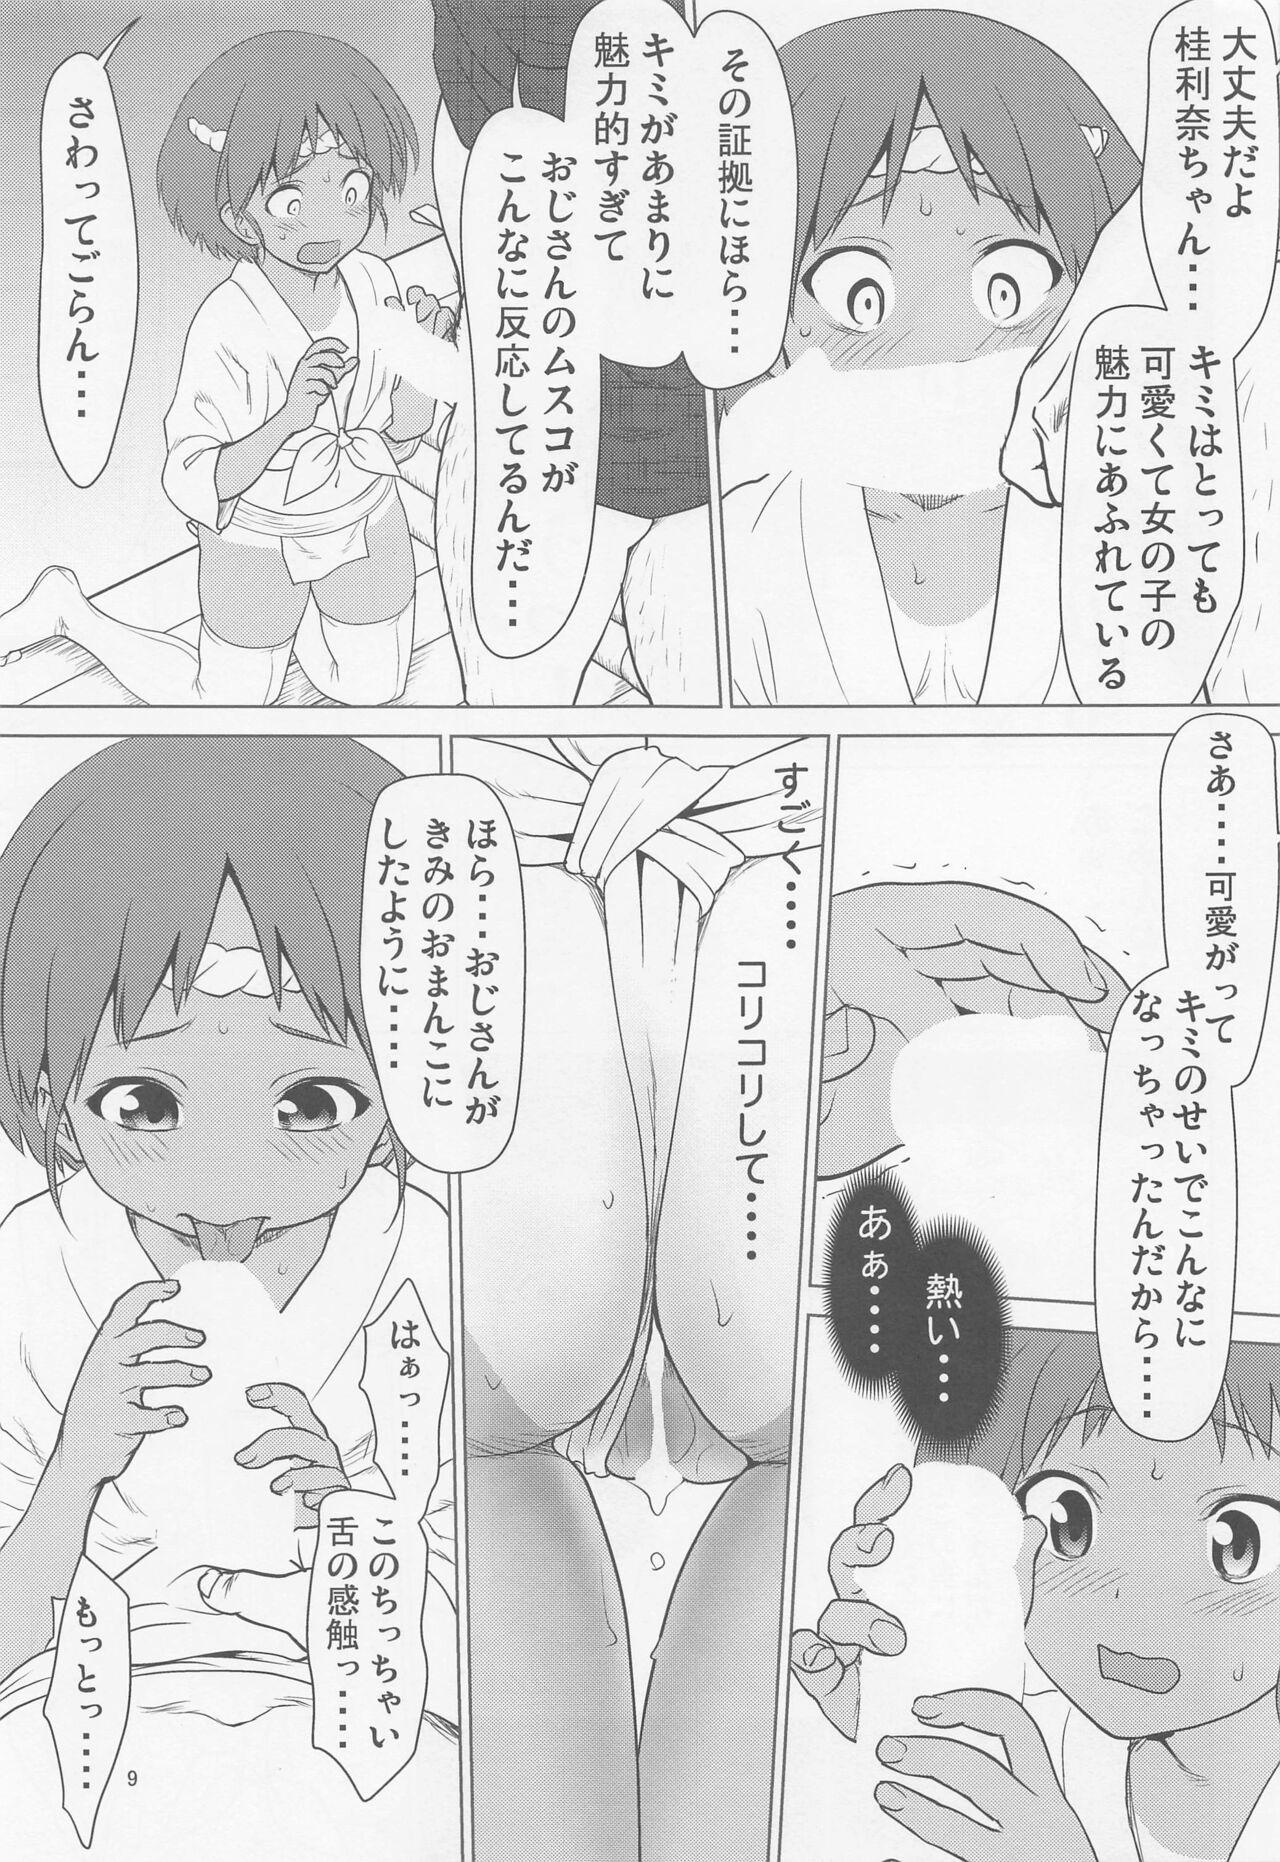 Black hiyakefundoshinokarinachantomonokagede・・・・ Lesbiansex - Page 8